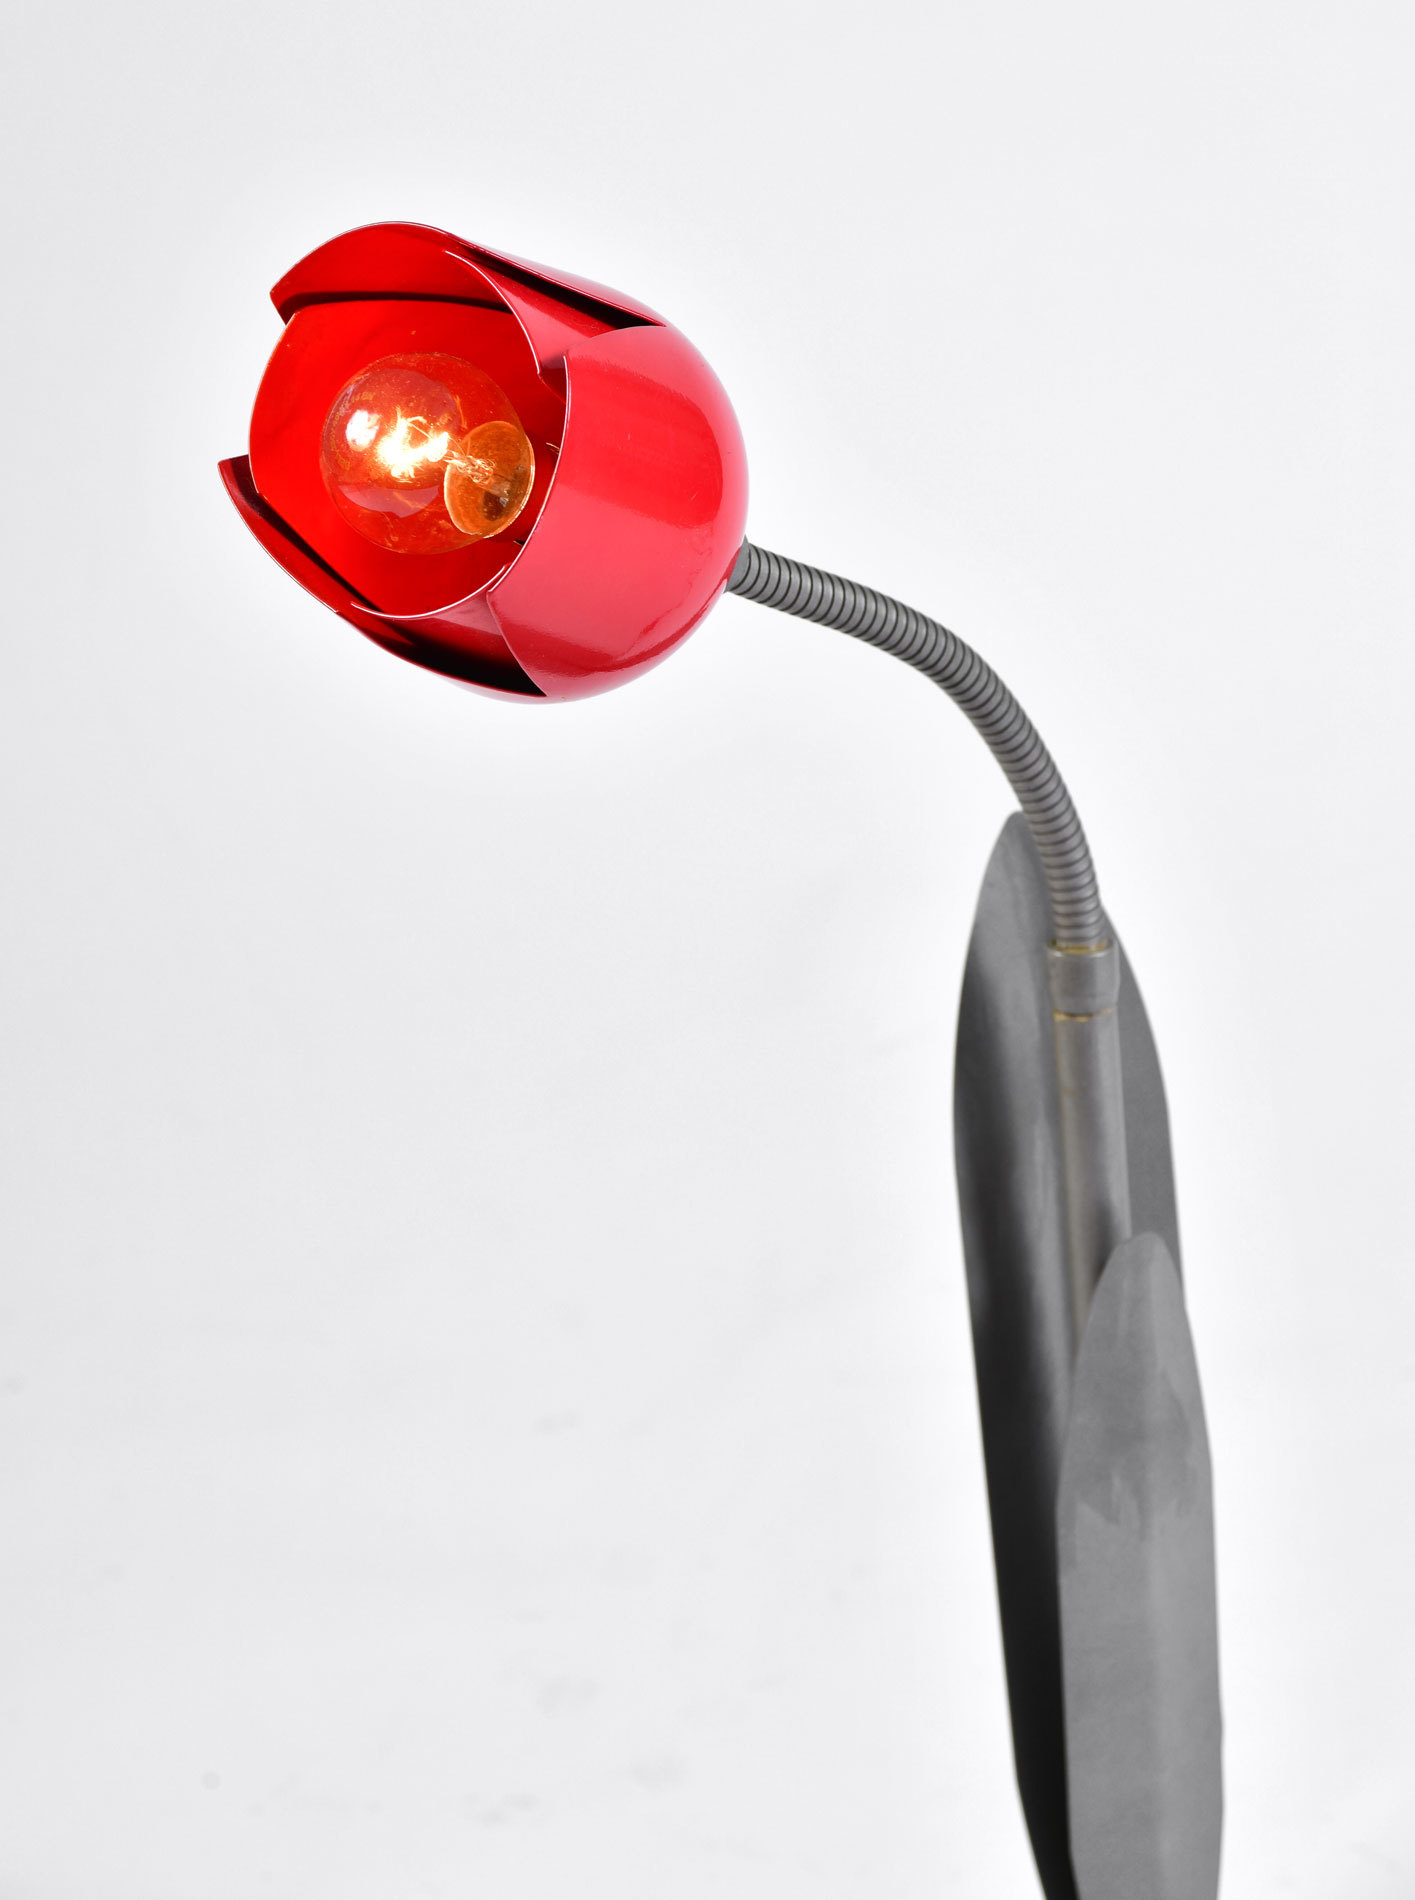 Peter Bliss Tulip Lamp 02